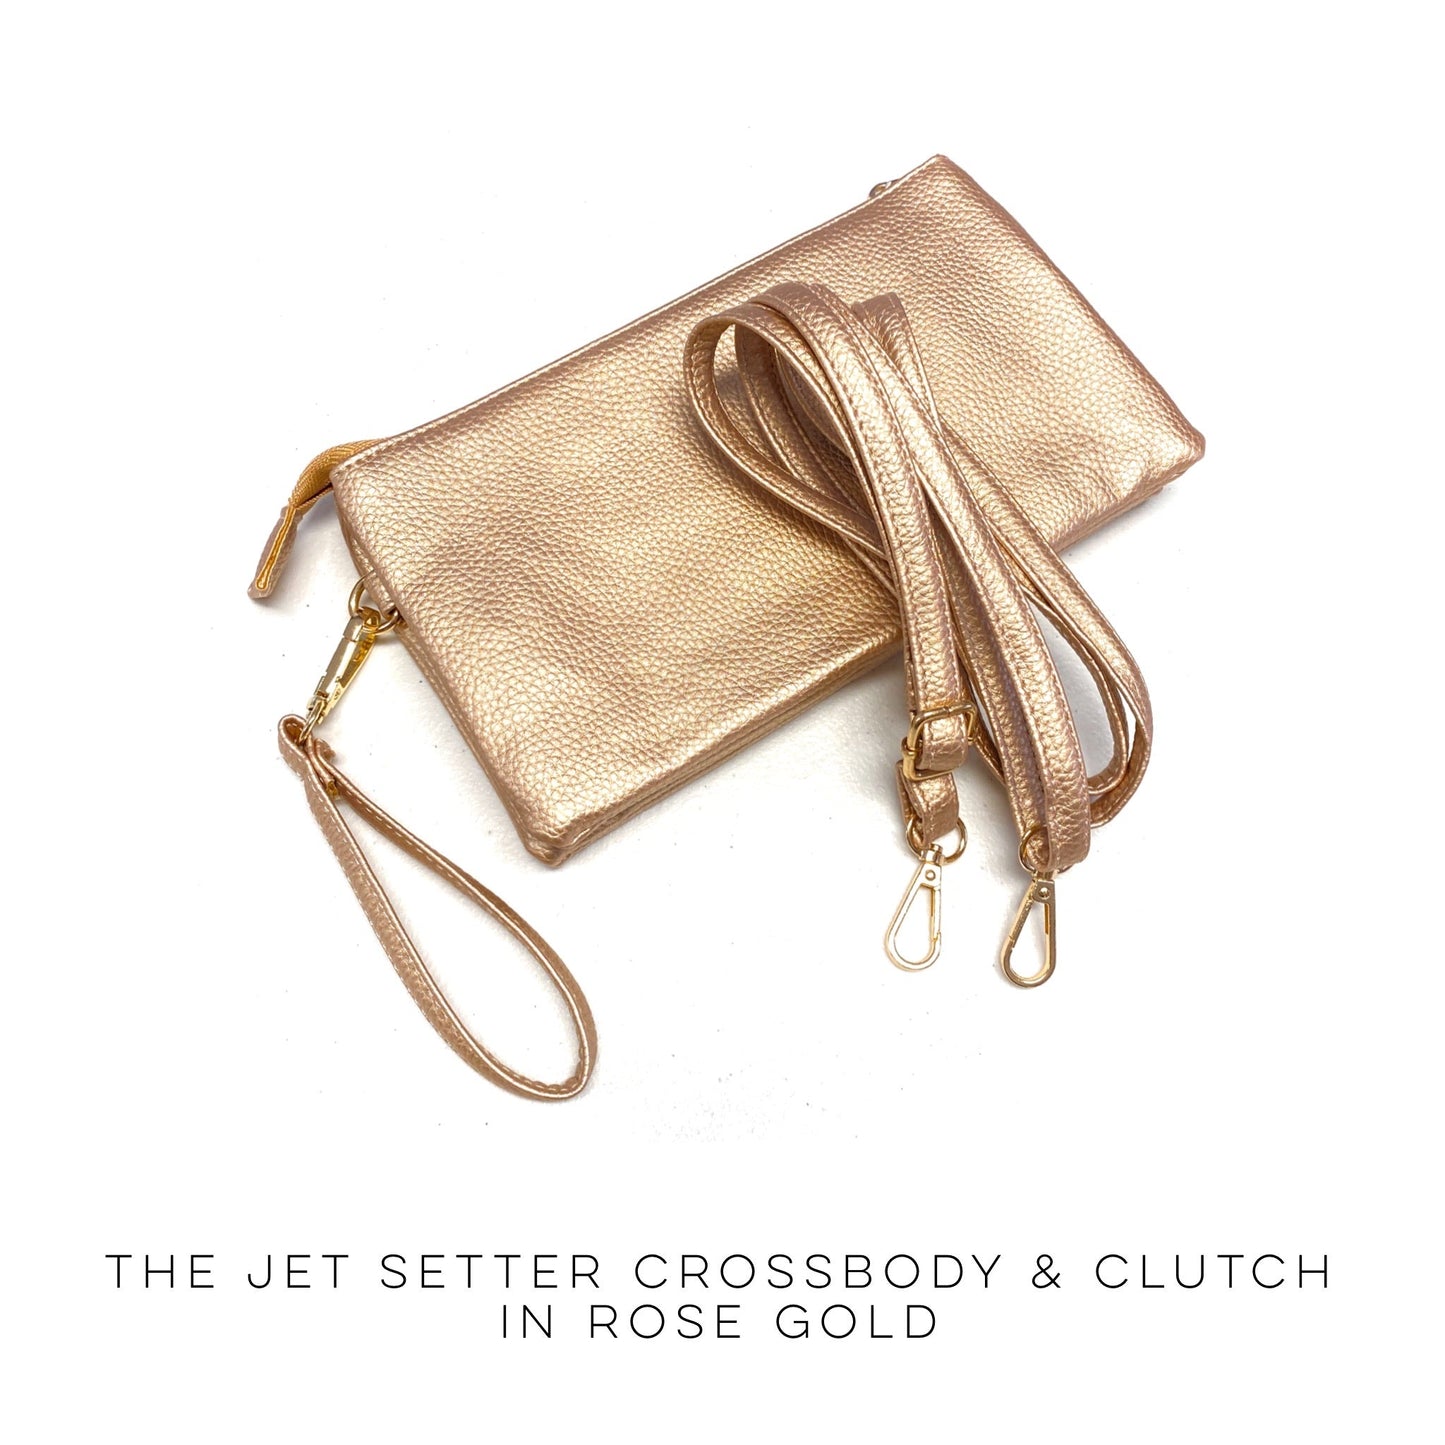 The Jet Setter Crossbody & Clutch in Rose Gold